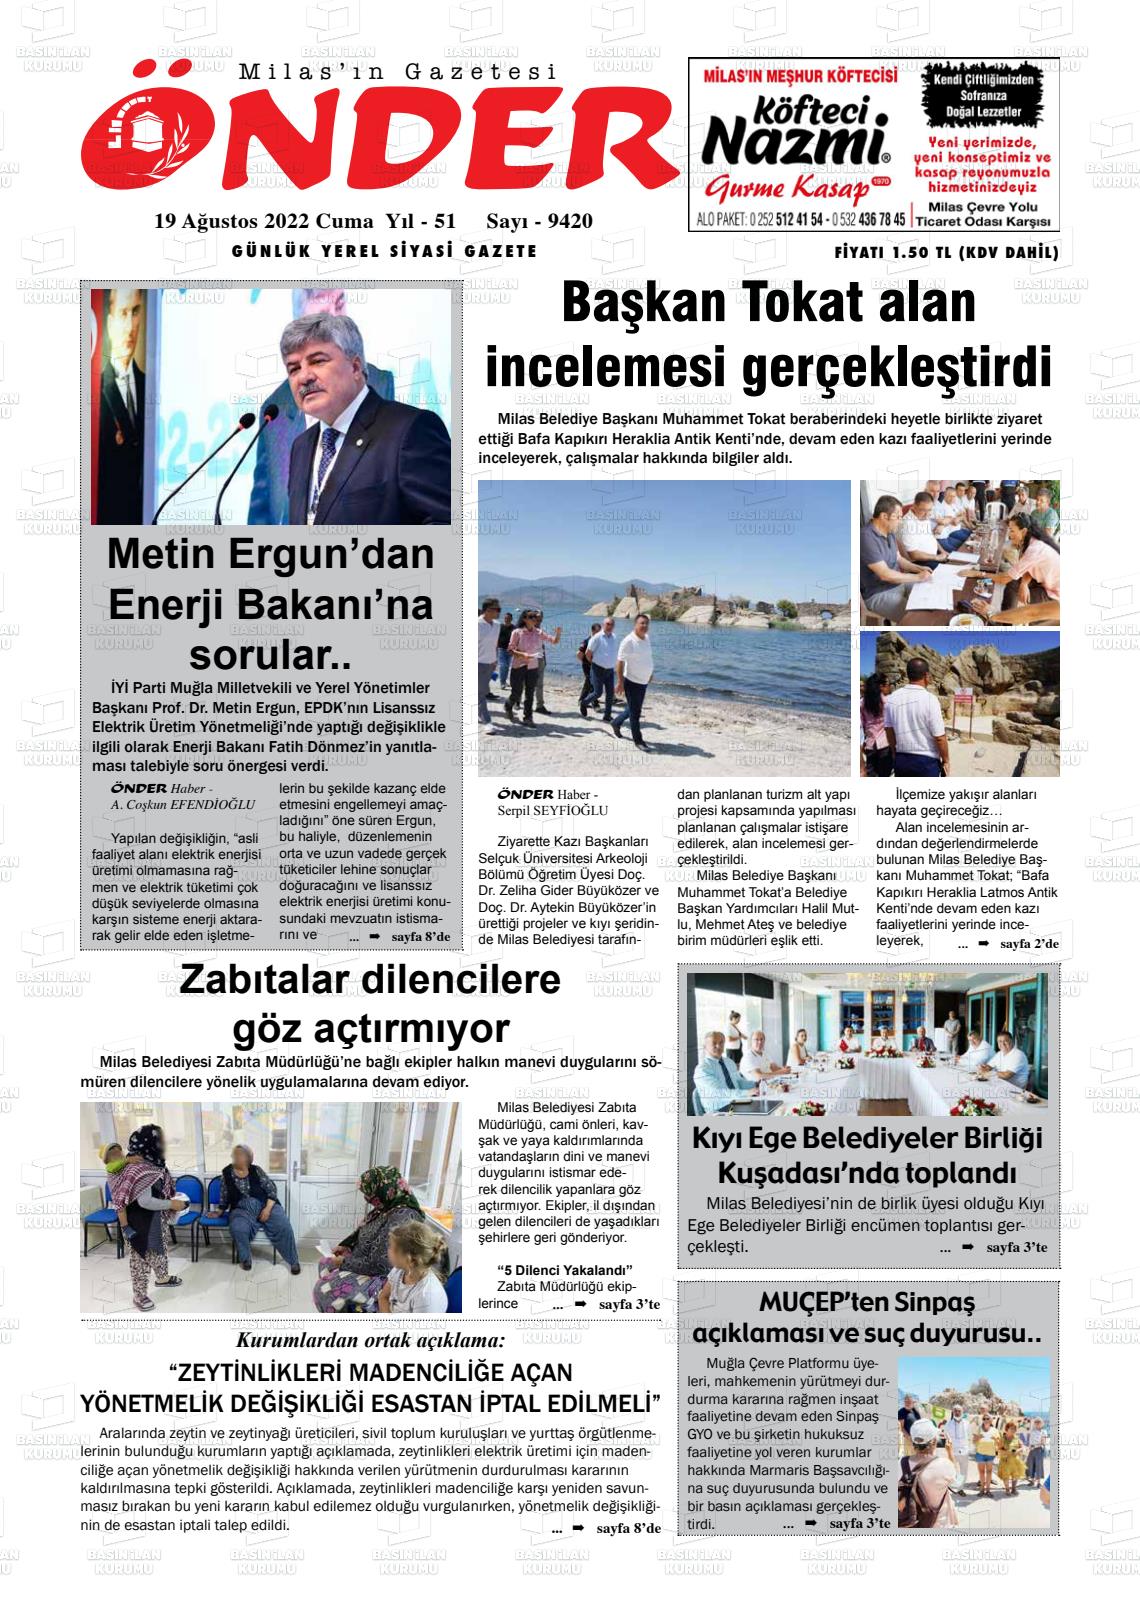 19 Ağustos 2022 Milas Önder Gazete Manşeti